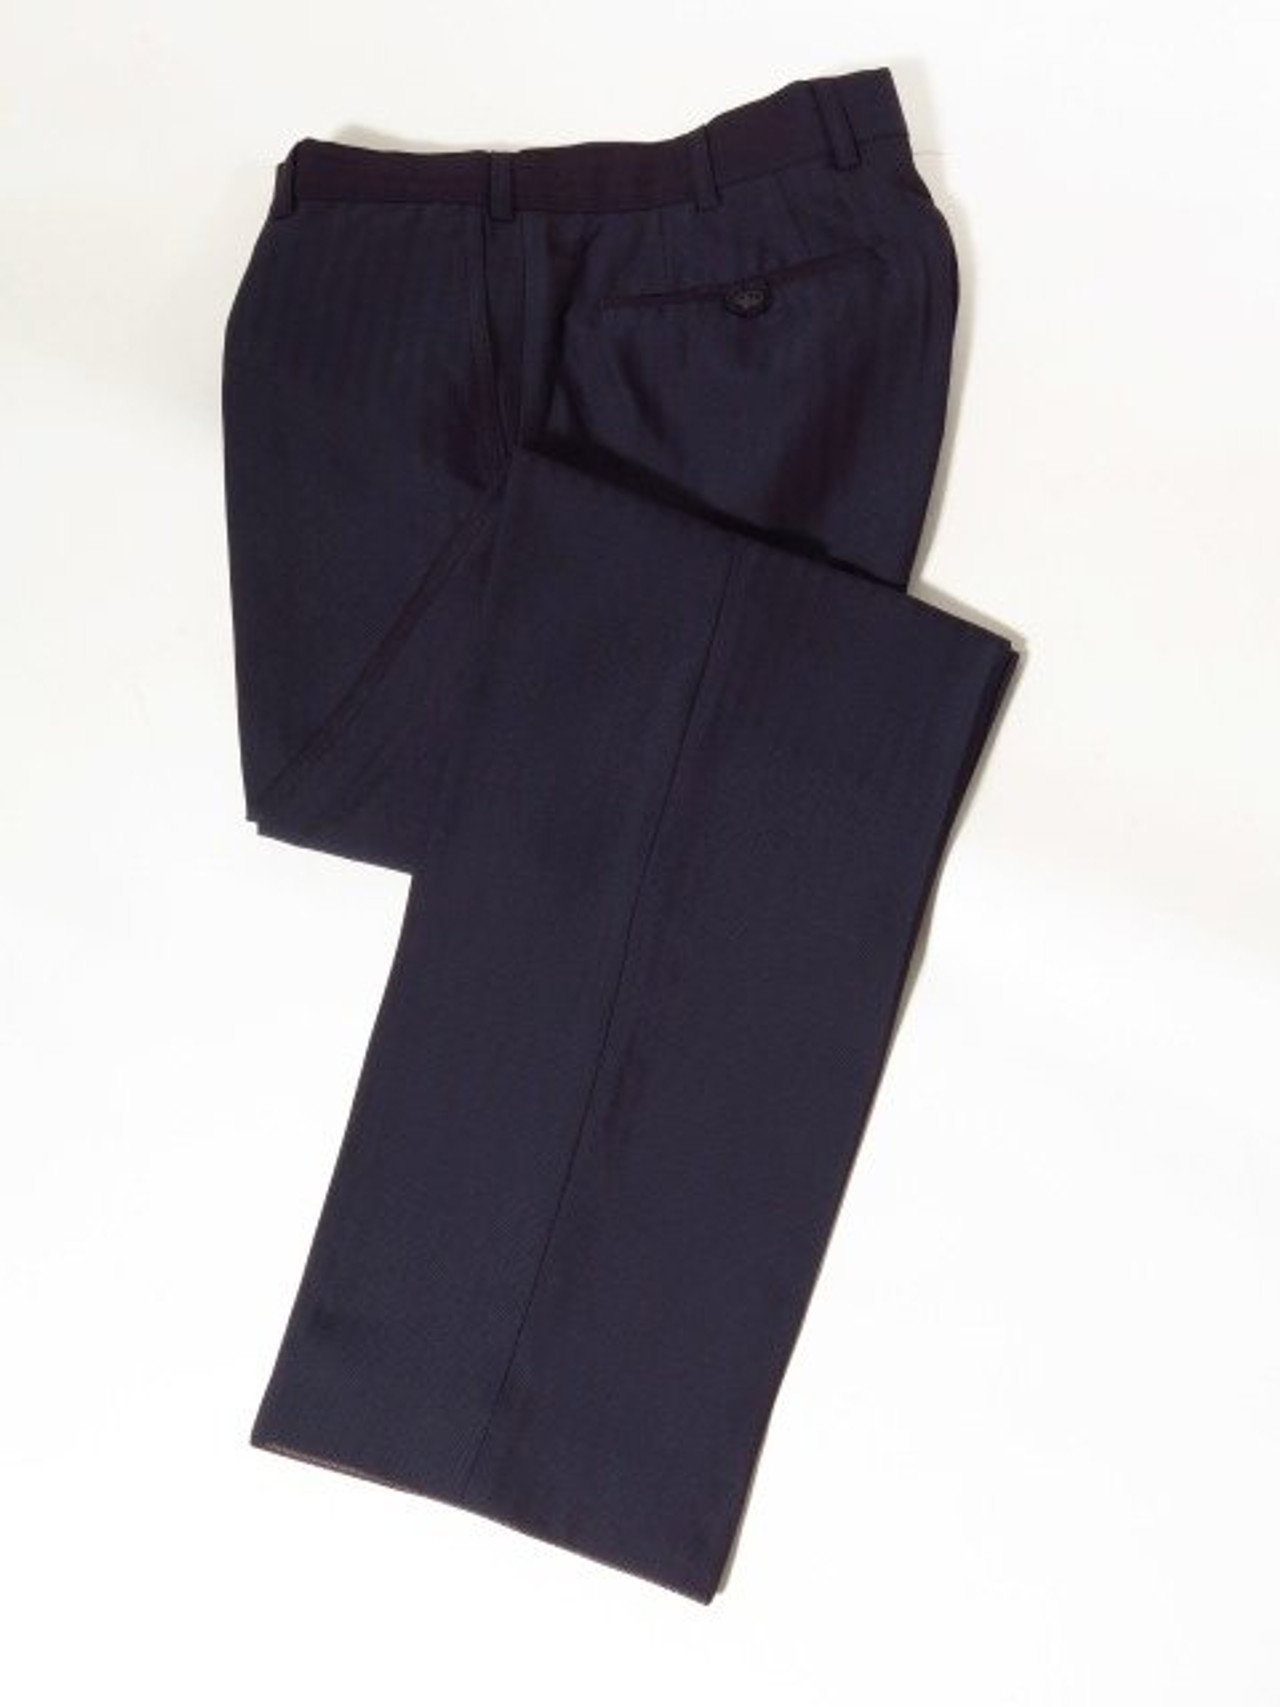 Ex-Hire Masterhand Navy Morning Suit Wedding Trousers - £24.99 - Tweedmans